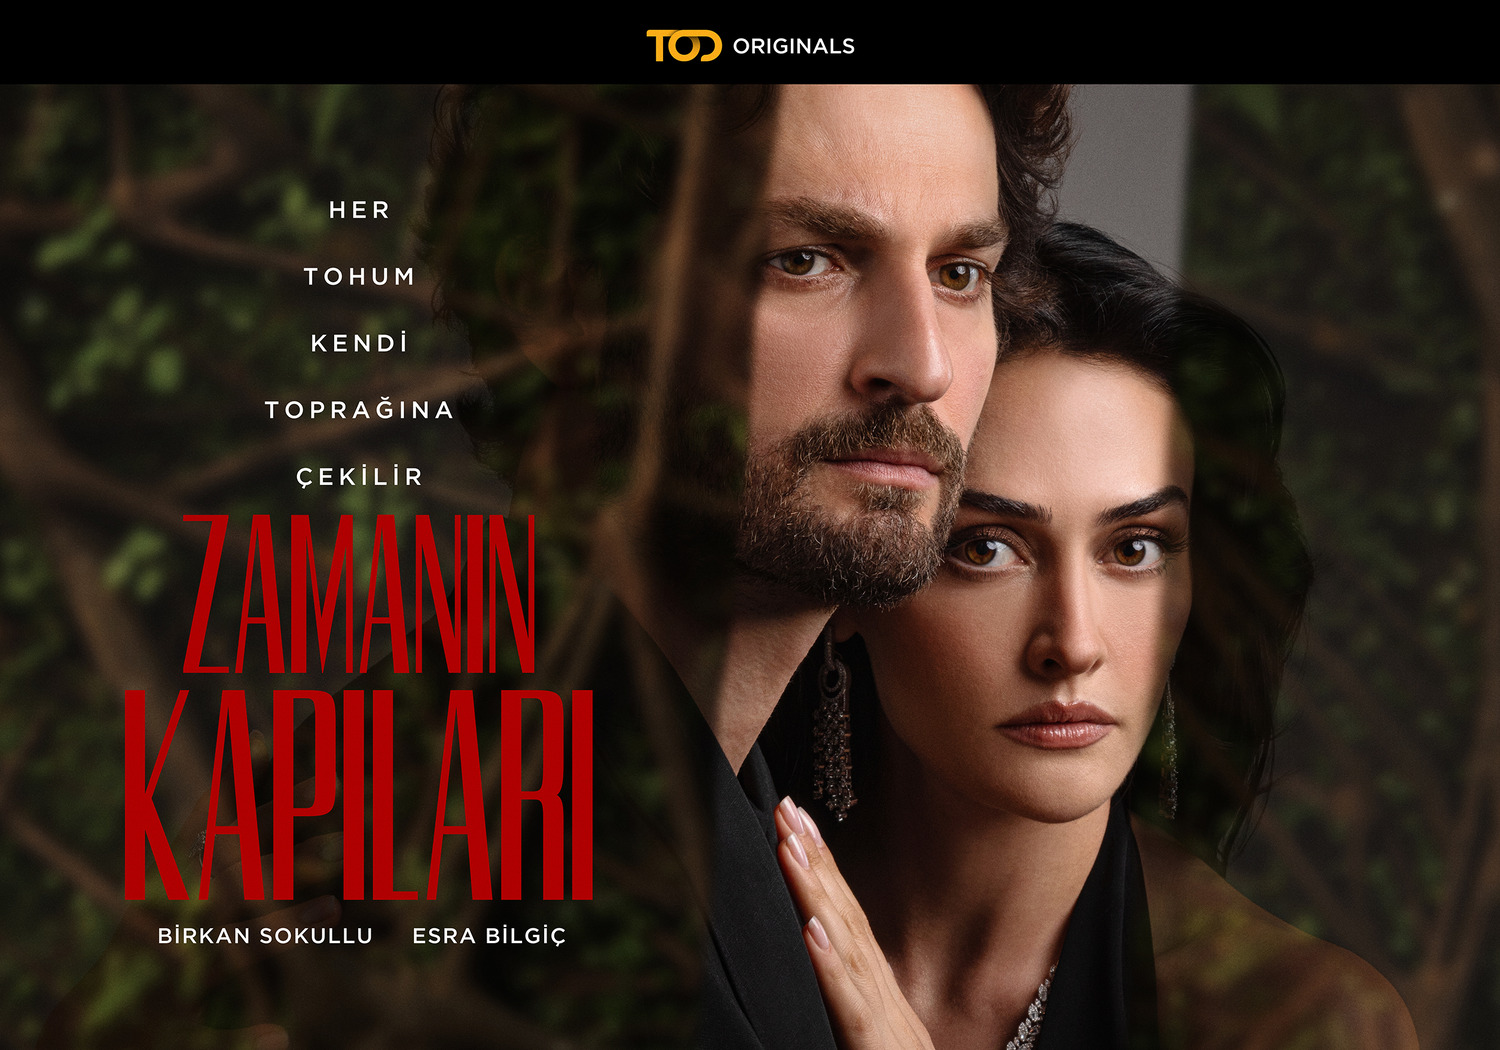 Extra Large TV Poster Image for Zamanin Kapilari (#3 of 4)